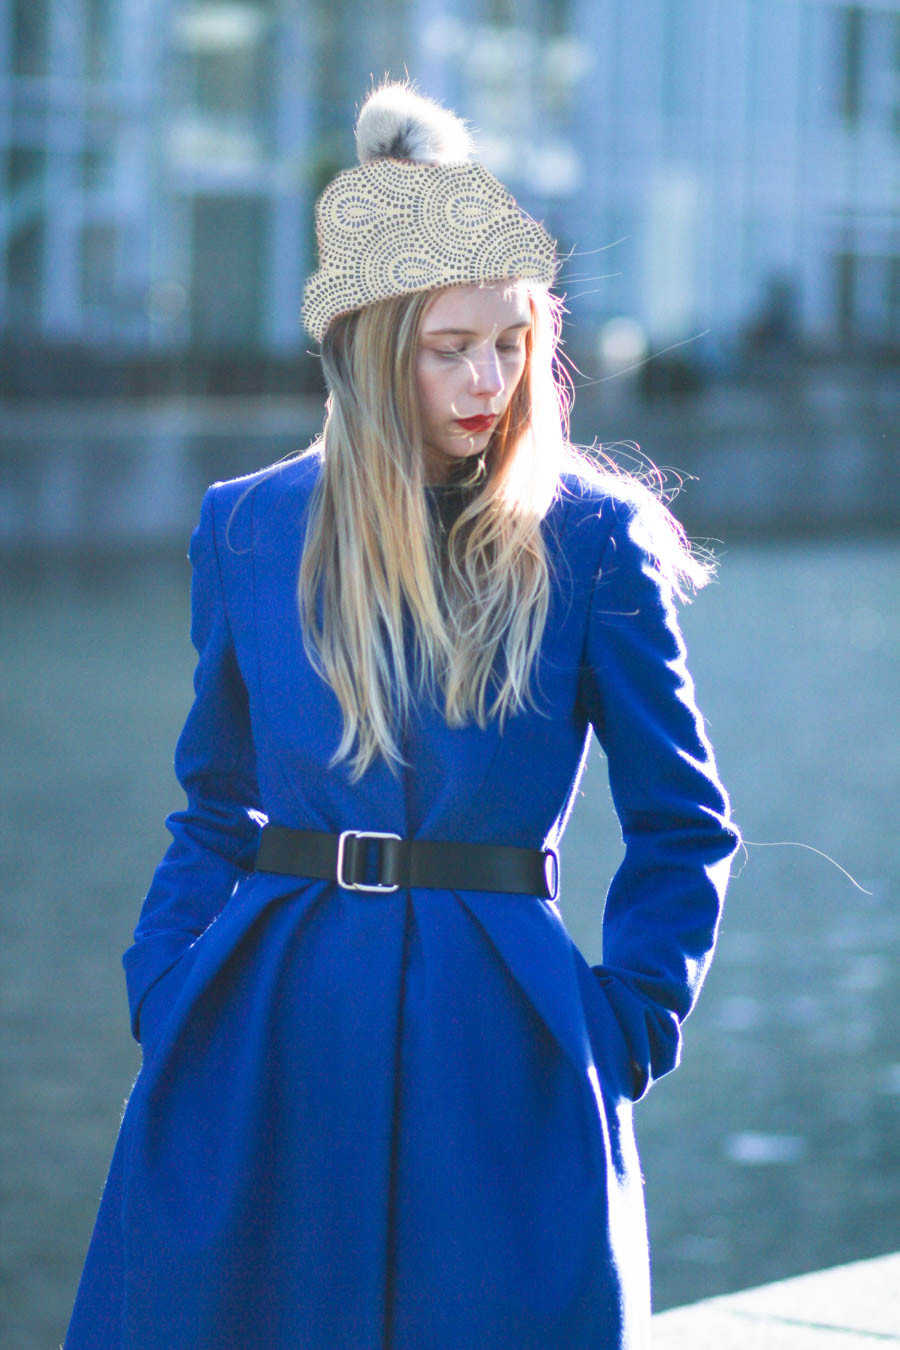 outfit December nemesis babe marie jensen danish blogger -7-2